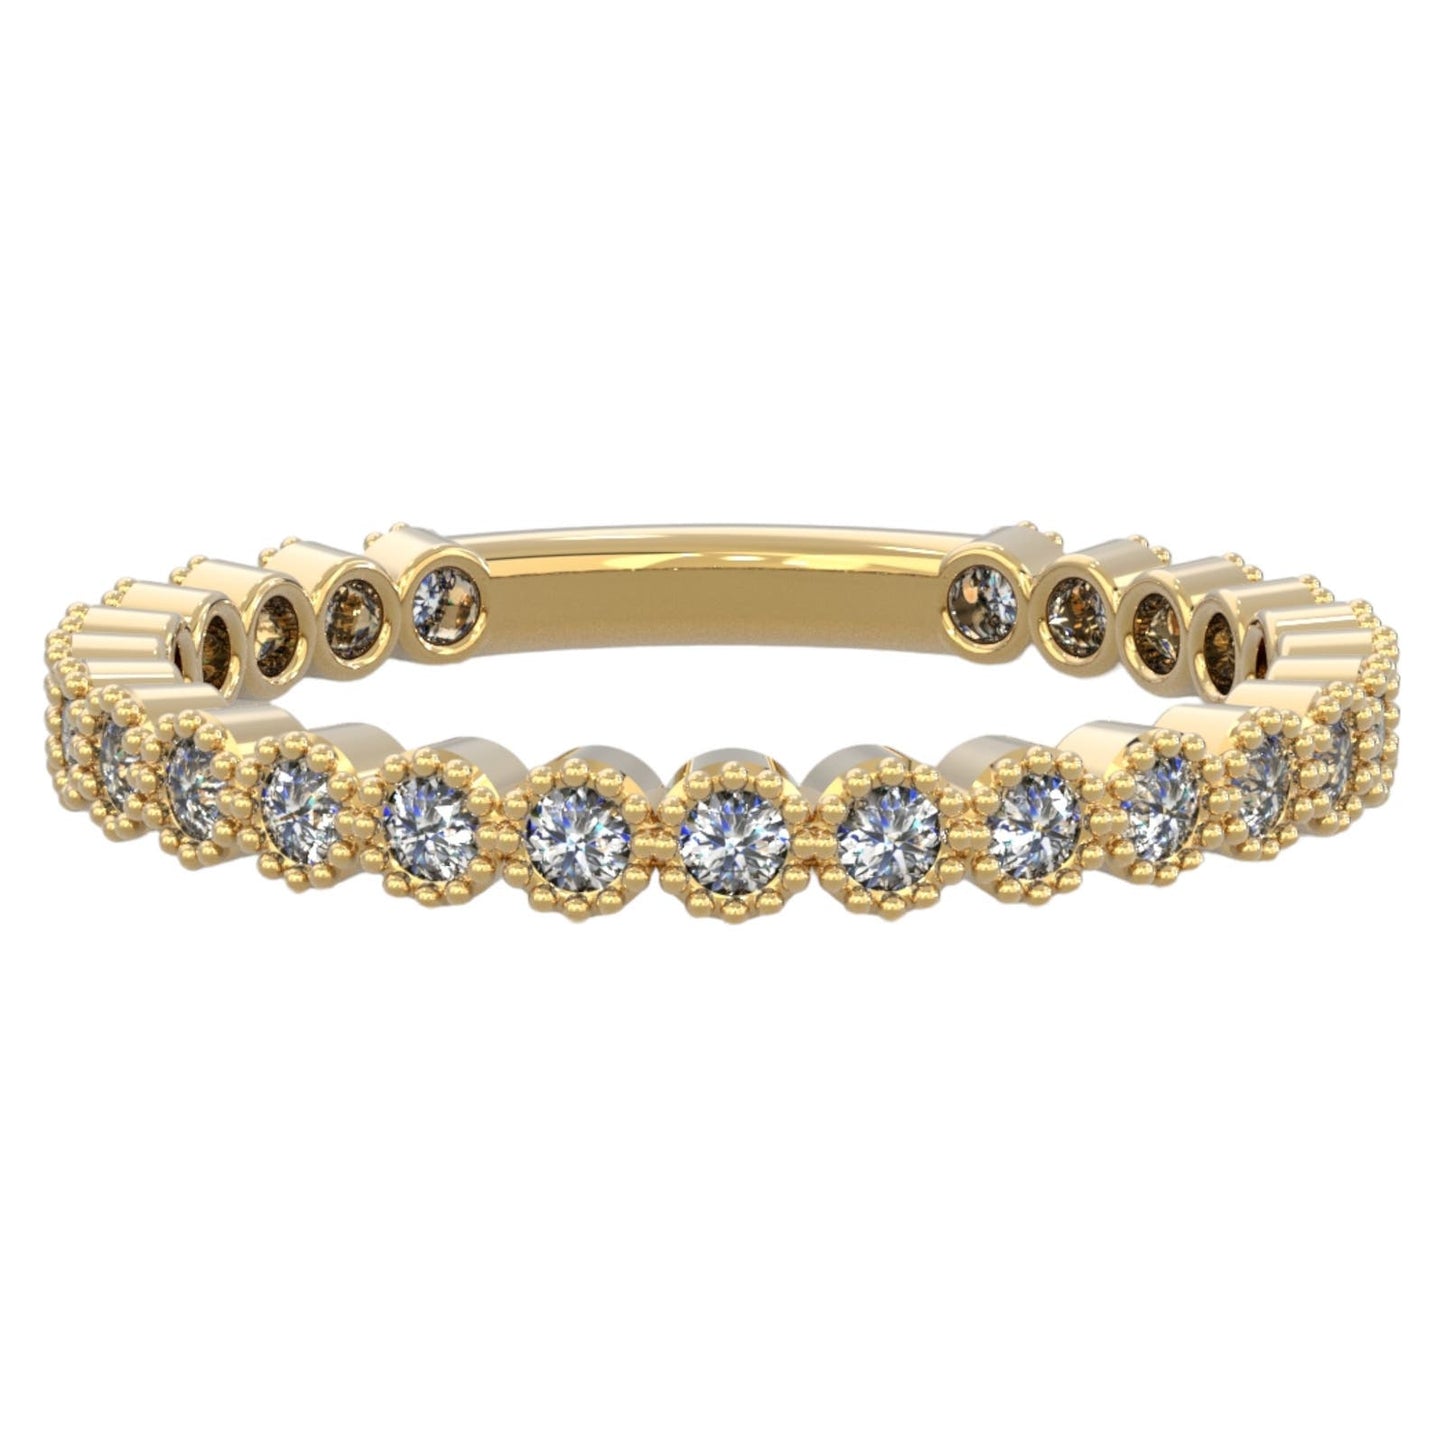 14K Rose & Yellow Gold 1 Ct Bezel Set Diamond Ring - USA Made, Size 6.5